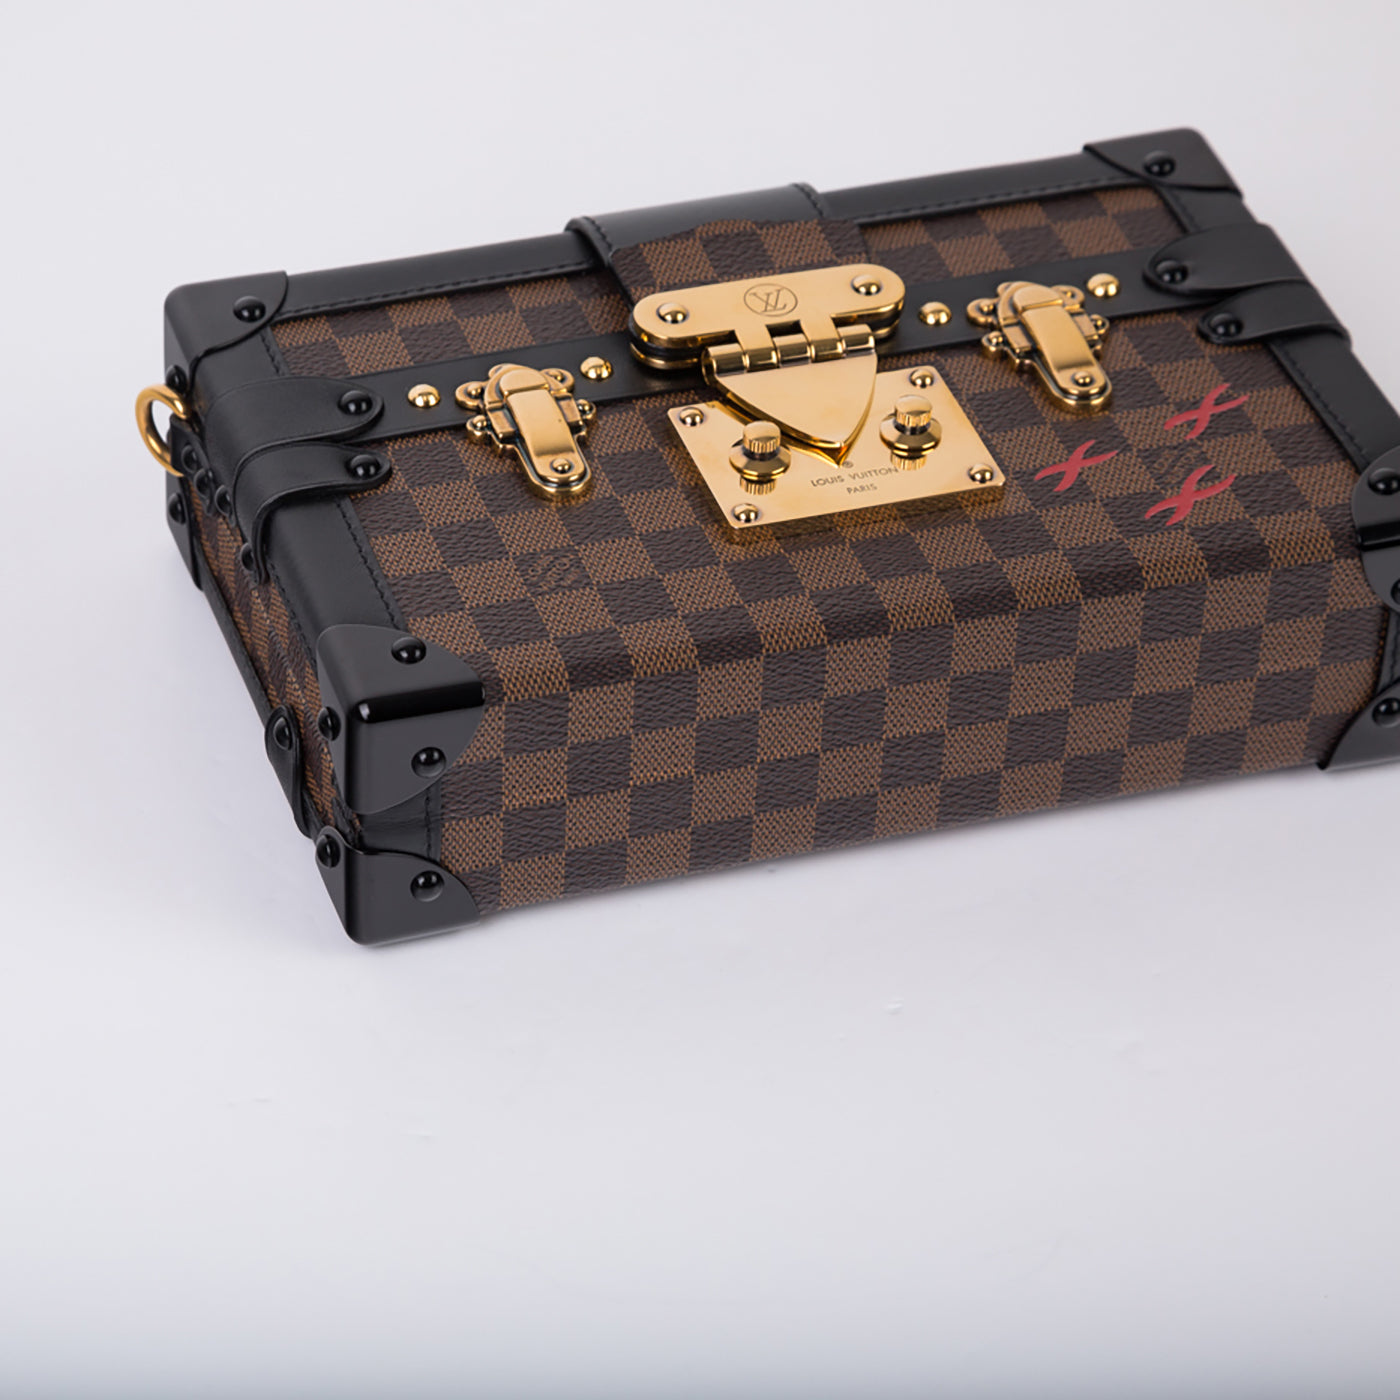 Treasure Chest: Shop the Petite Malle now at www.Bagista.co.uk #LouisVuitton  #PetiteMalle #Monogram #LV #Fashion #Handbags #Bagista…